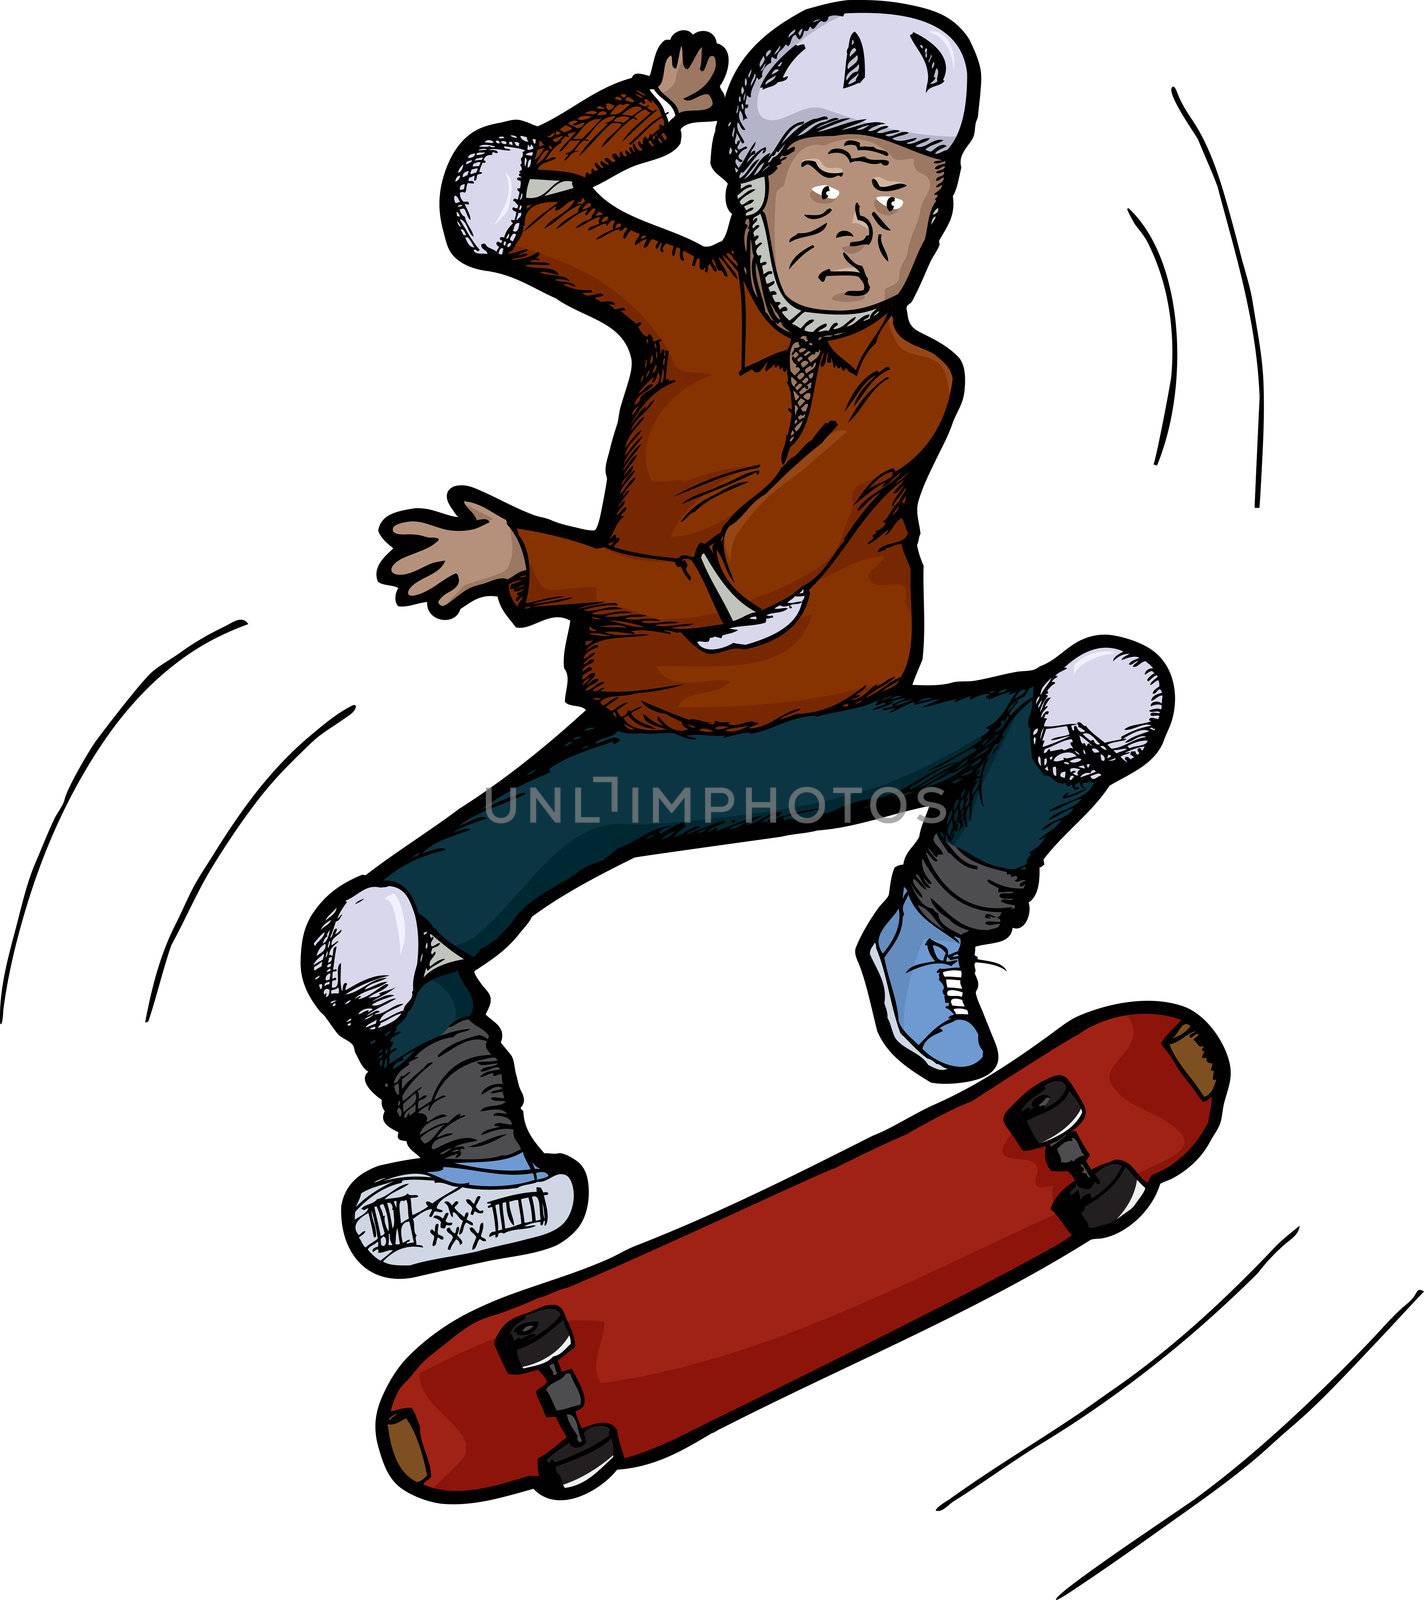 Latino senior citizen does skateboarding stunts